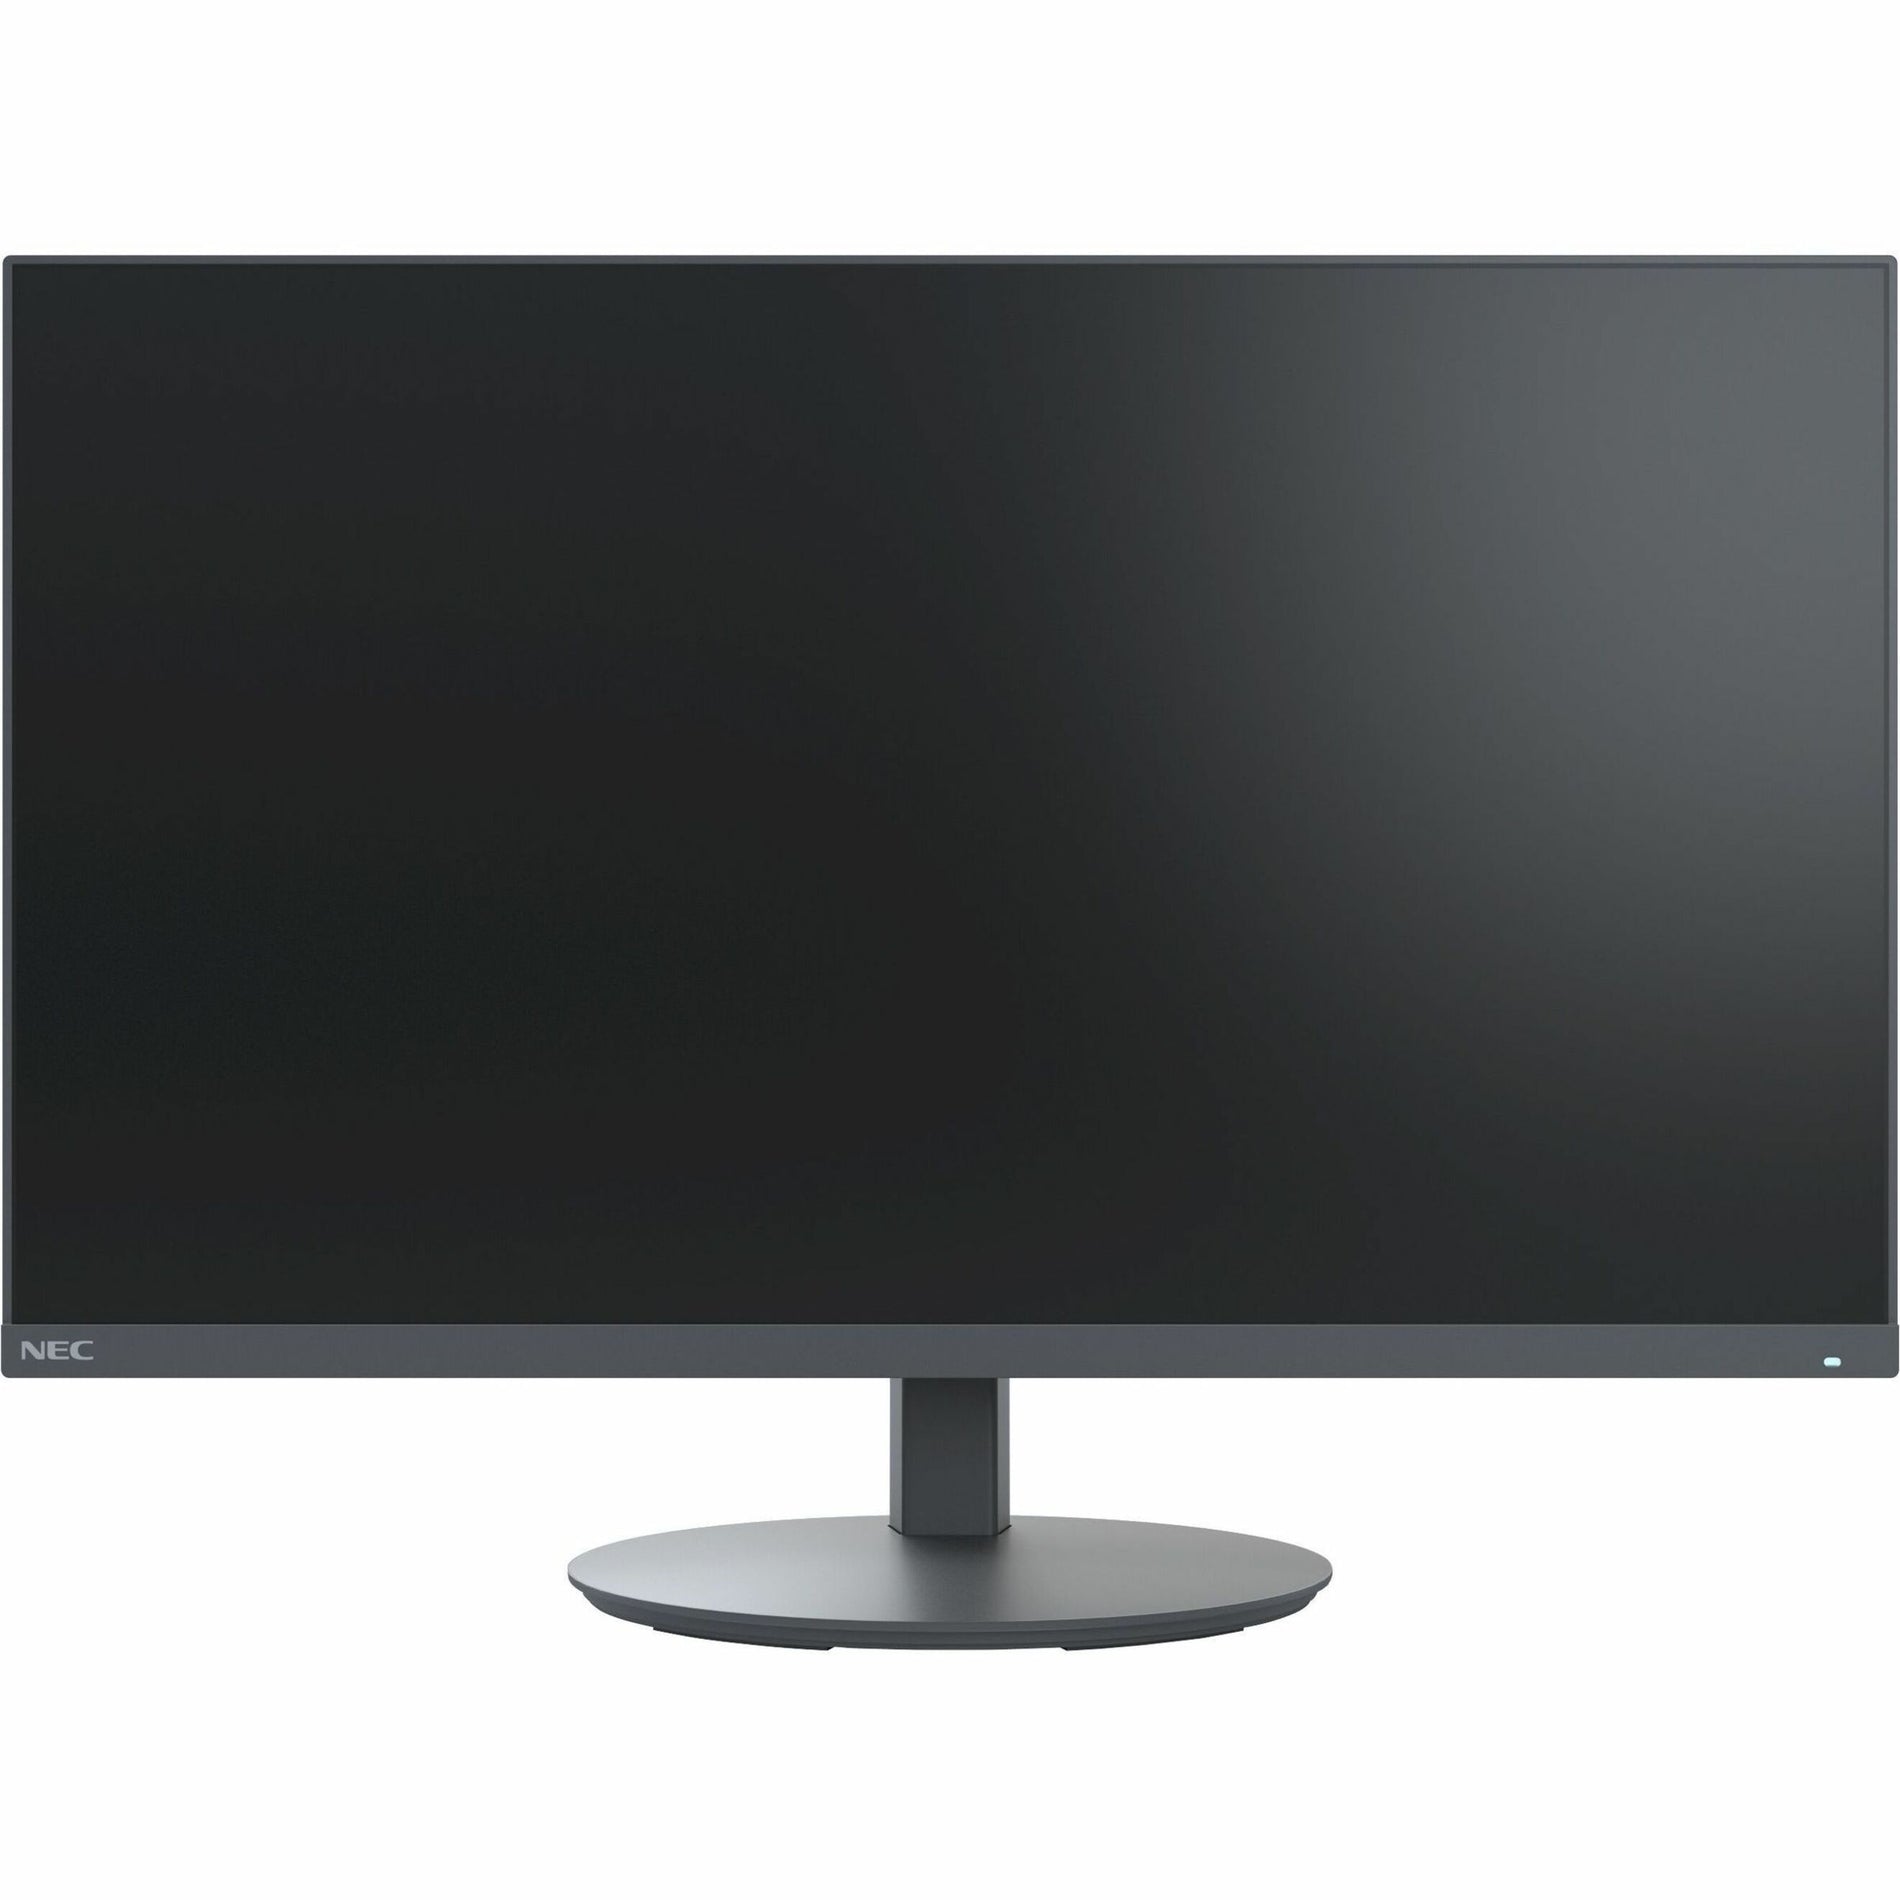 NEC Display MultiSync E244FL-BK Widescreen LED Monitor, Full HD, 23.8", 16:9, 250 Nit, 3,000:1, 75 Hz